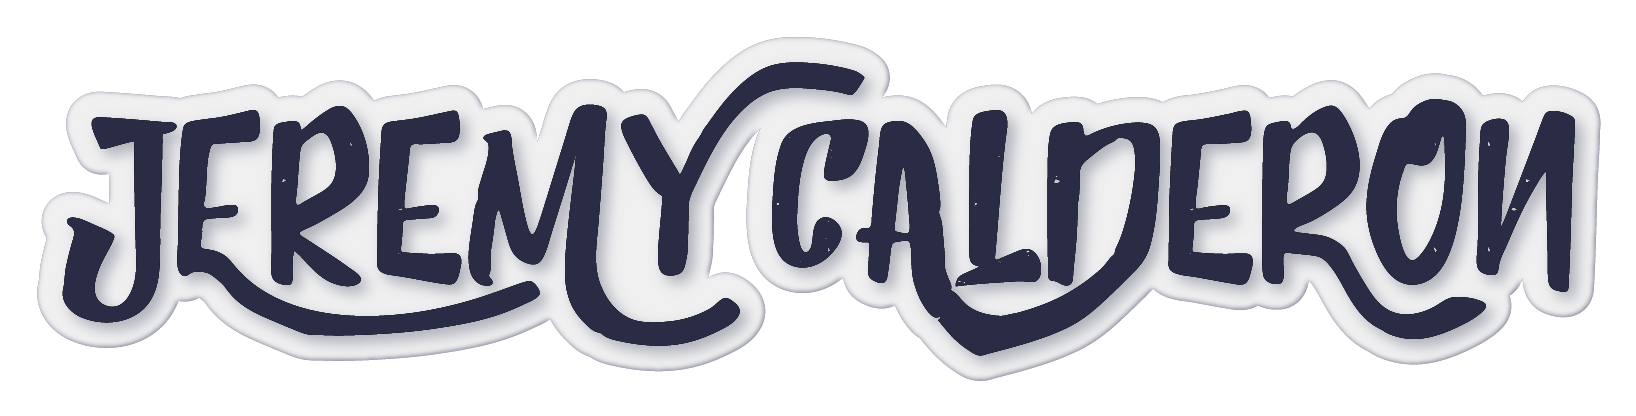 Jeremy Name Logo - Jeremy Calderon | Illustrations, graphics, and other fun stuff!